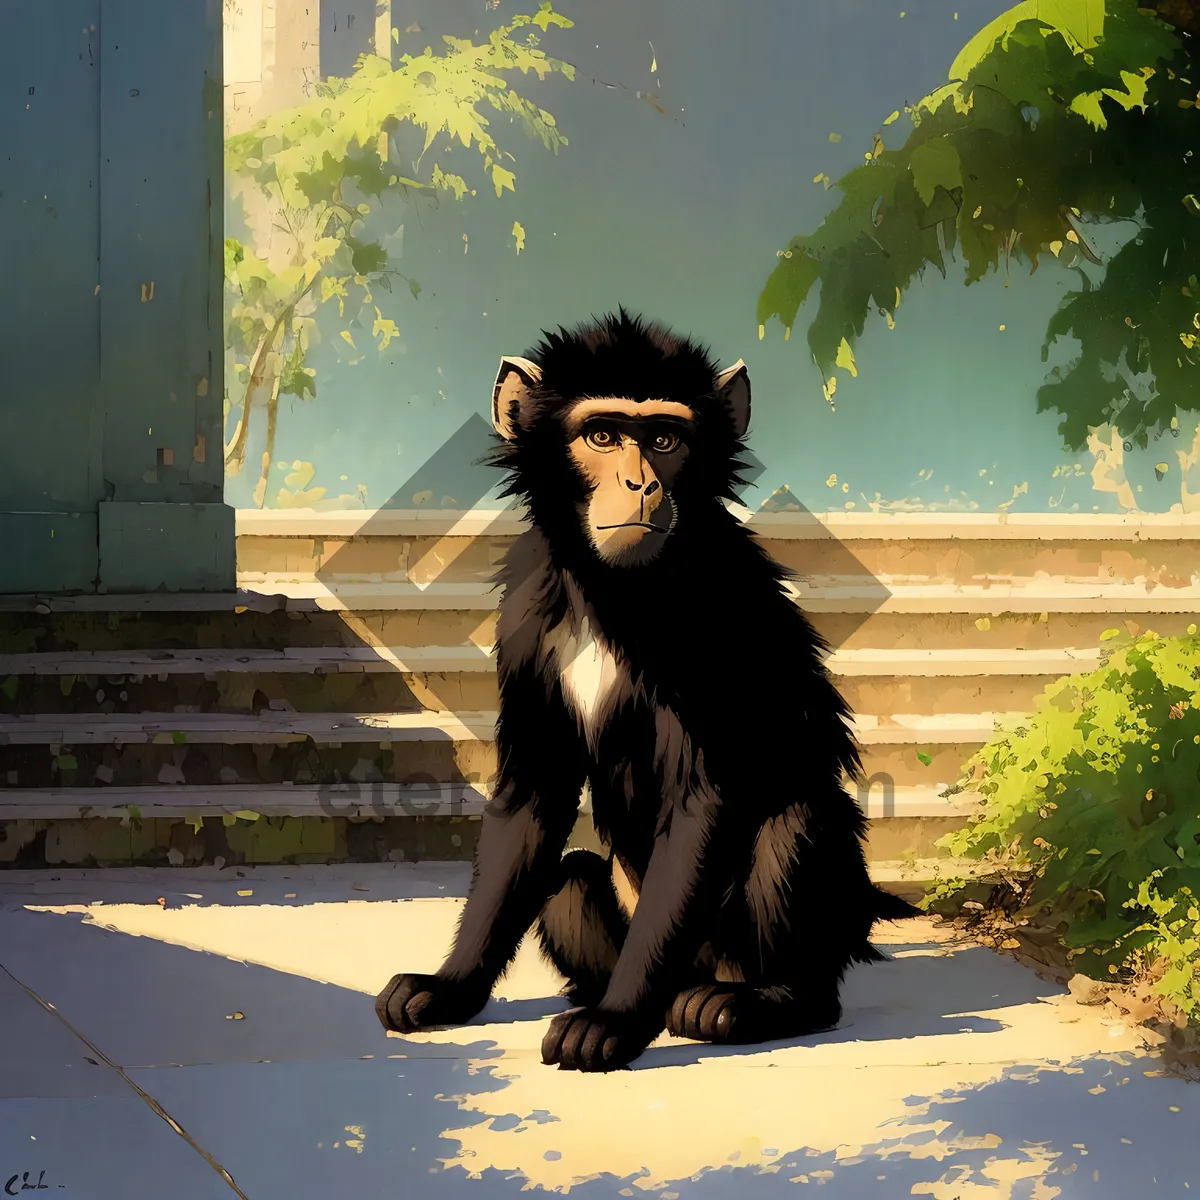 Picture of Primate Ape with Lush Fur Coat